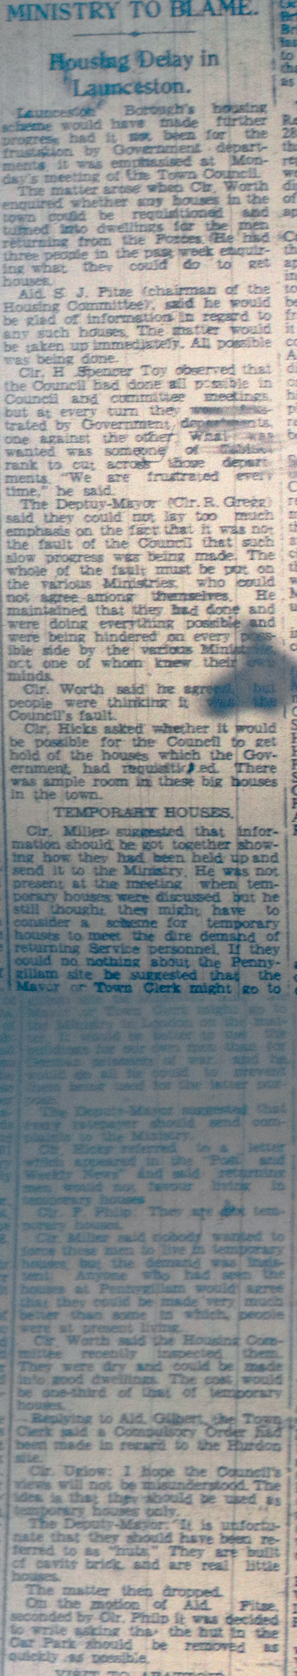 Launceston Housing Delay Report July 1945.